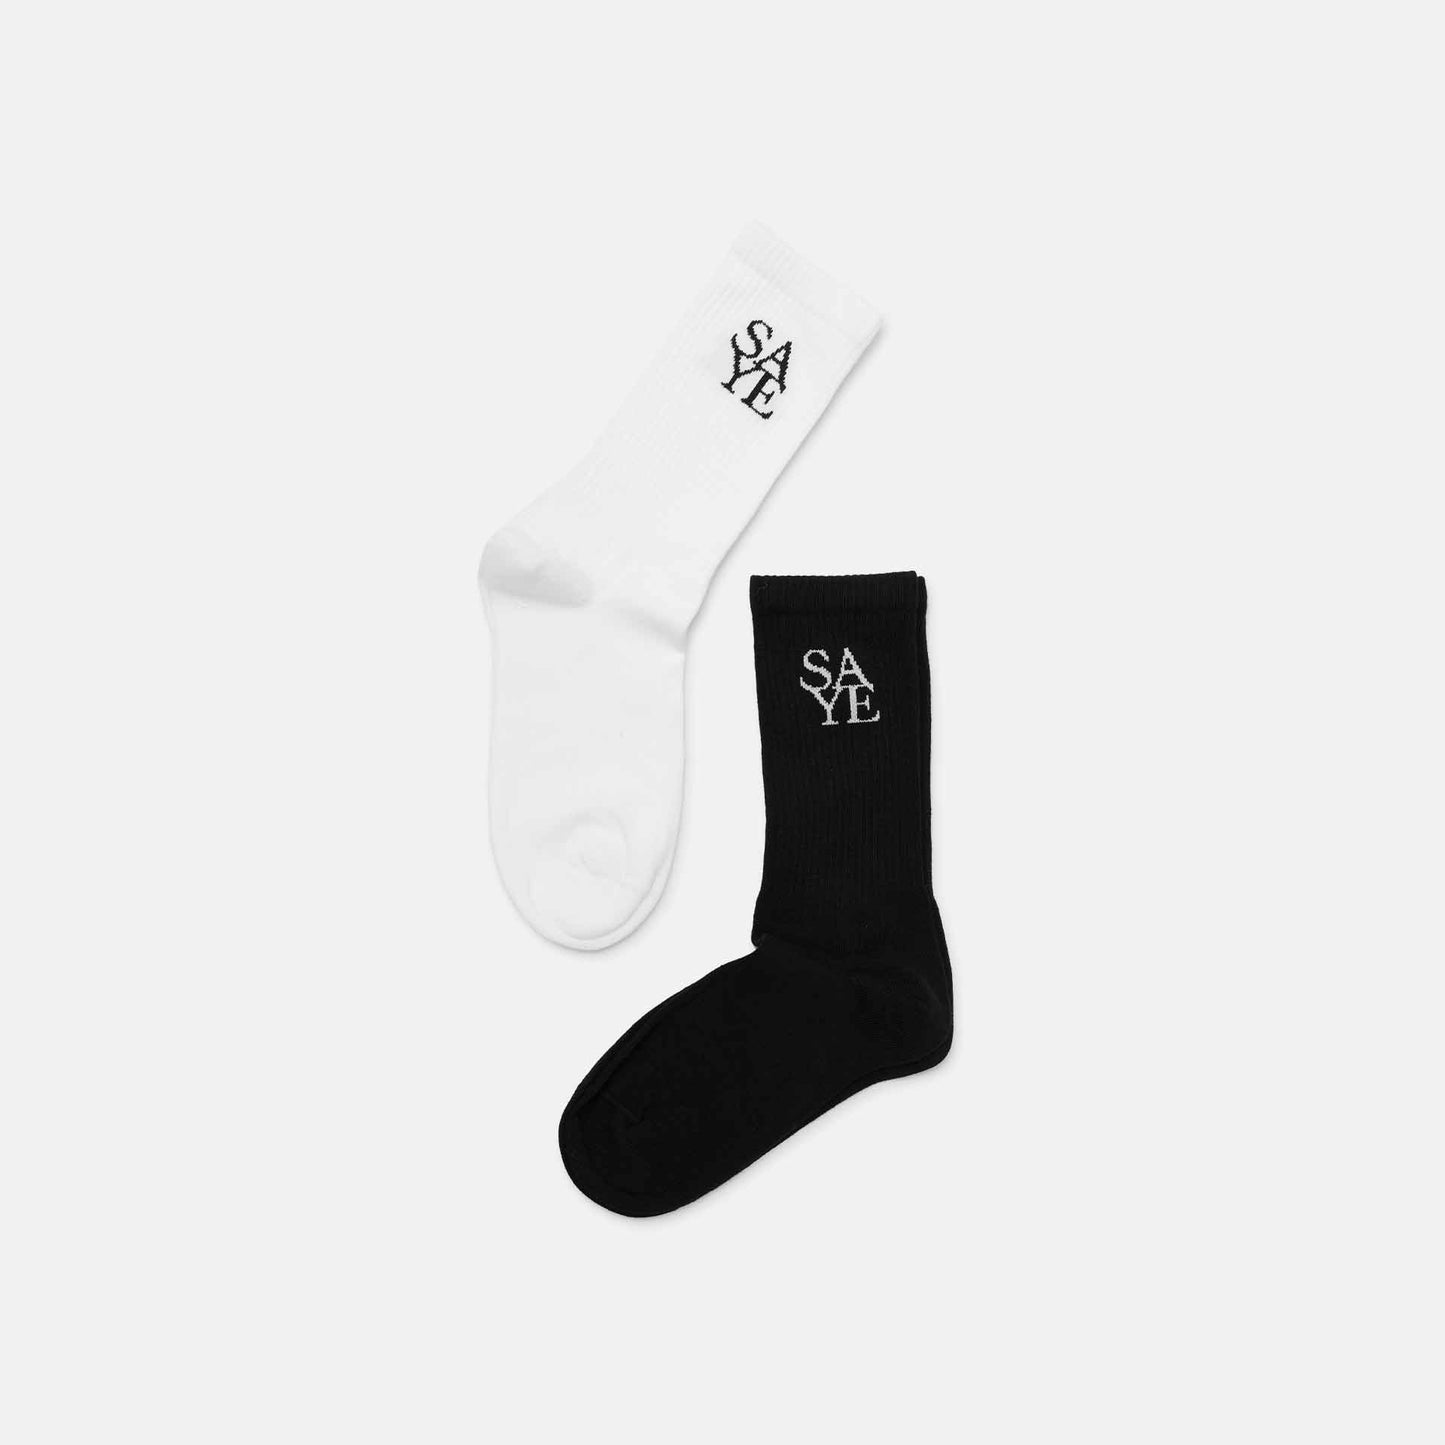 Crew Everyday Socks - Black & White